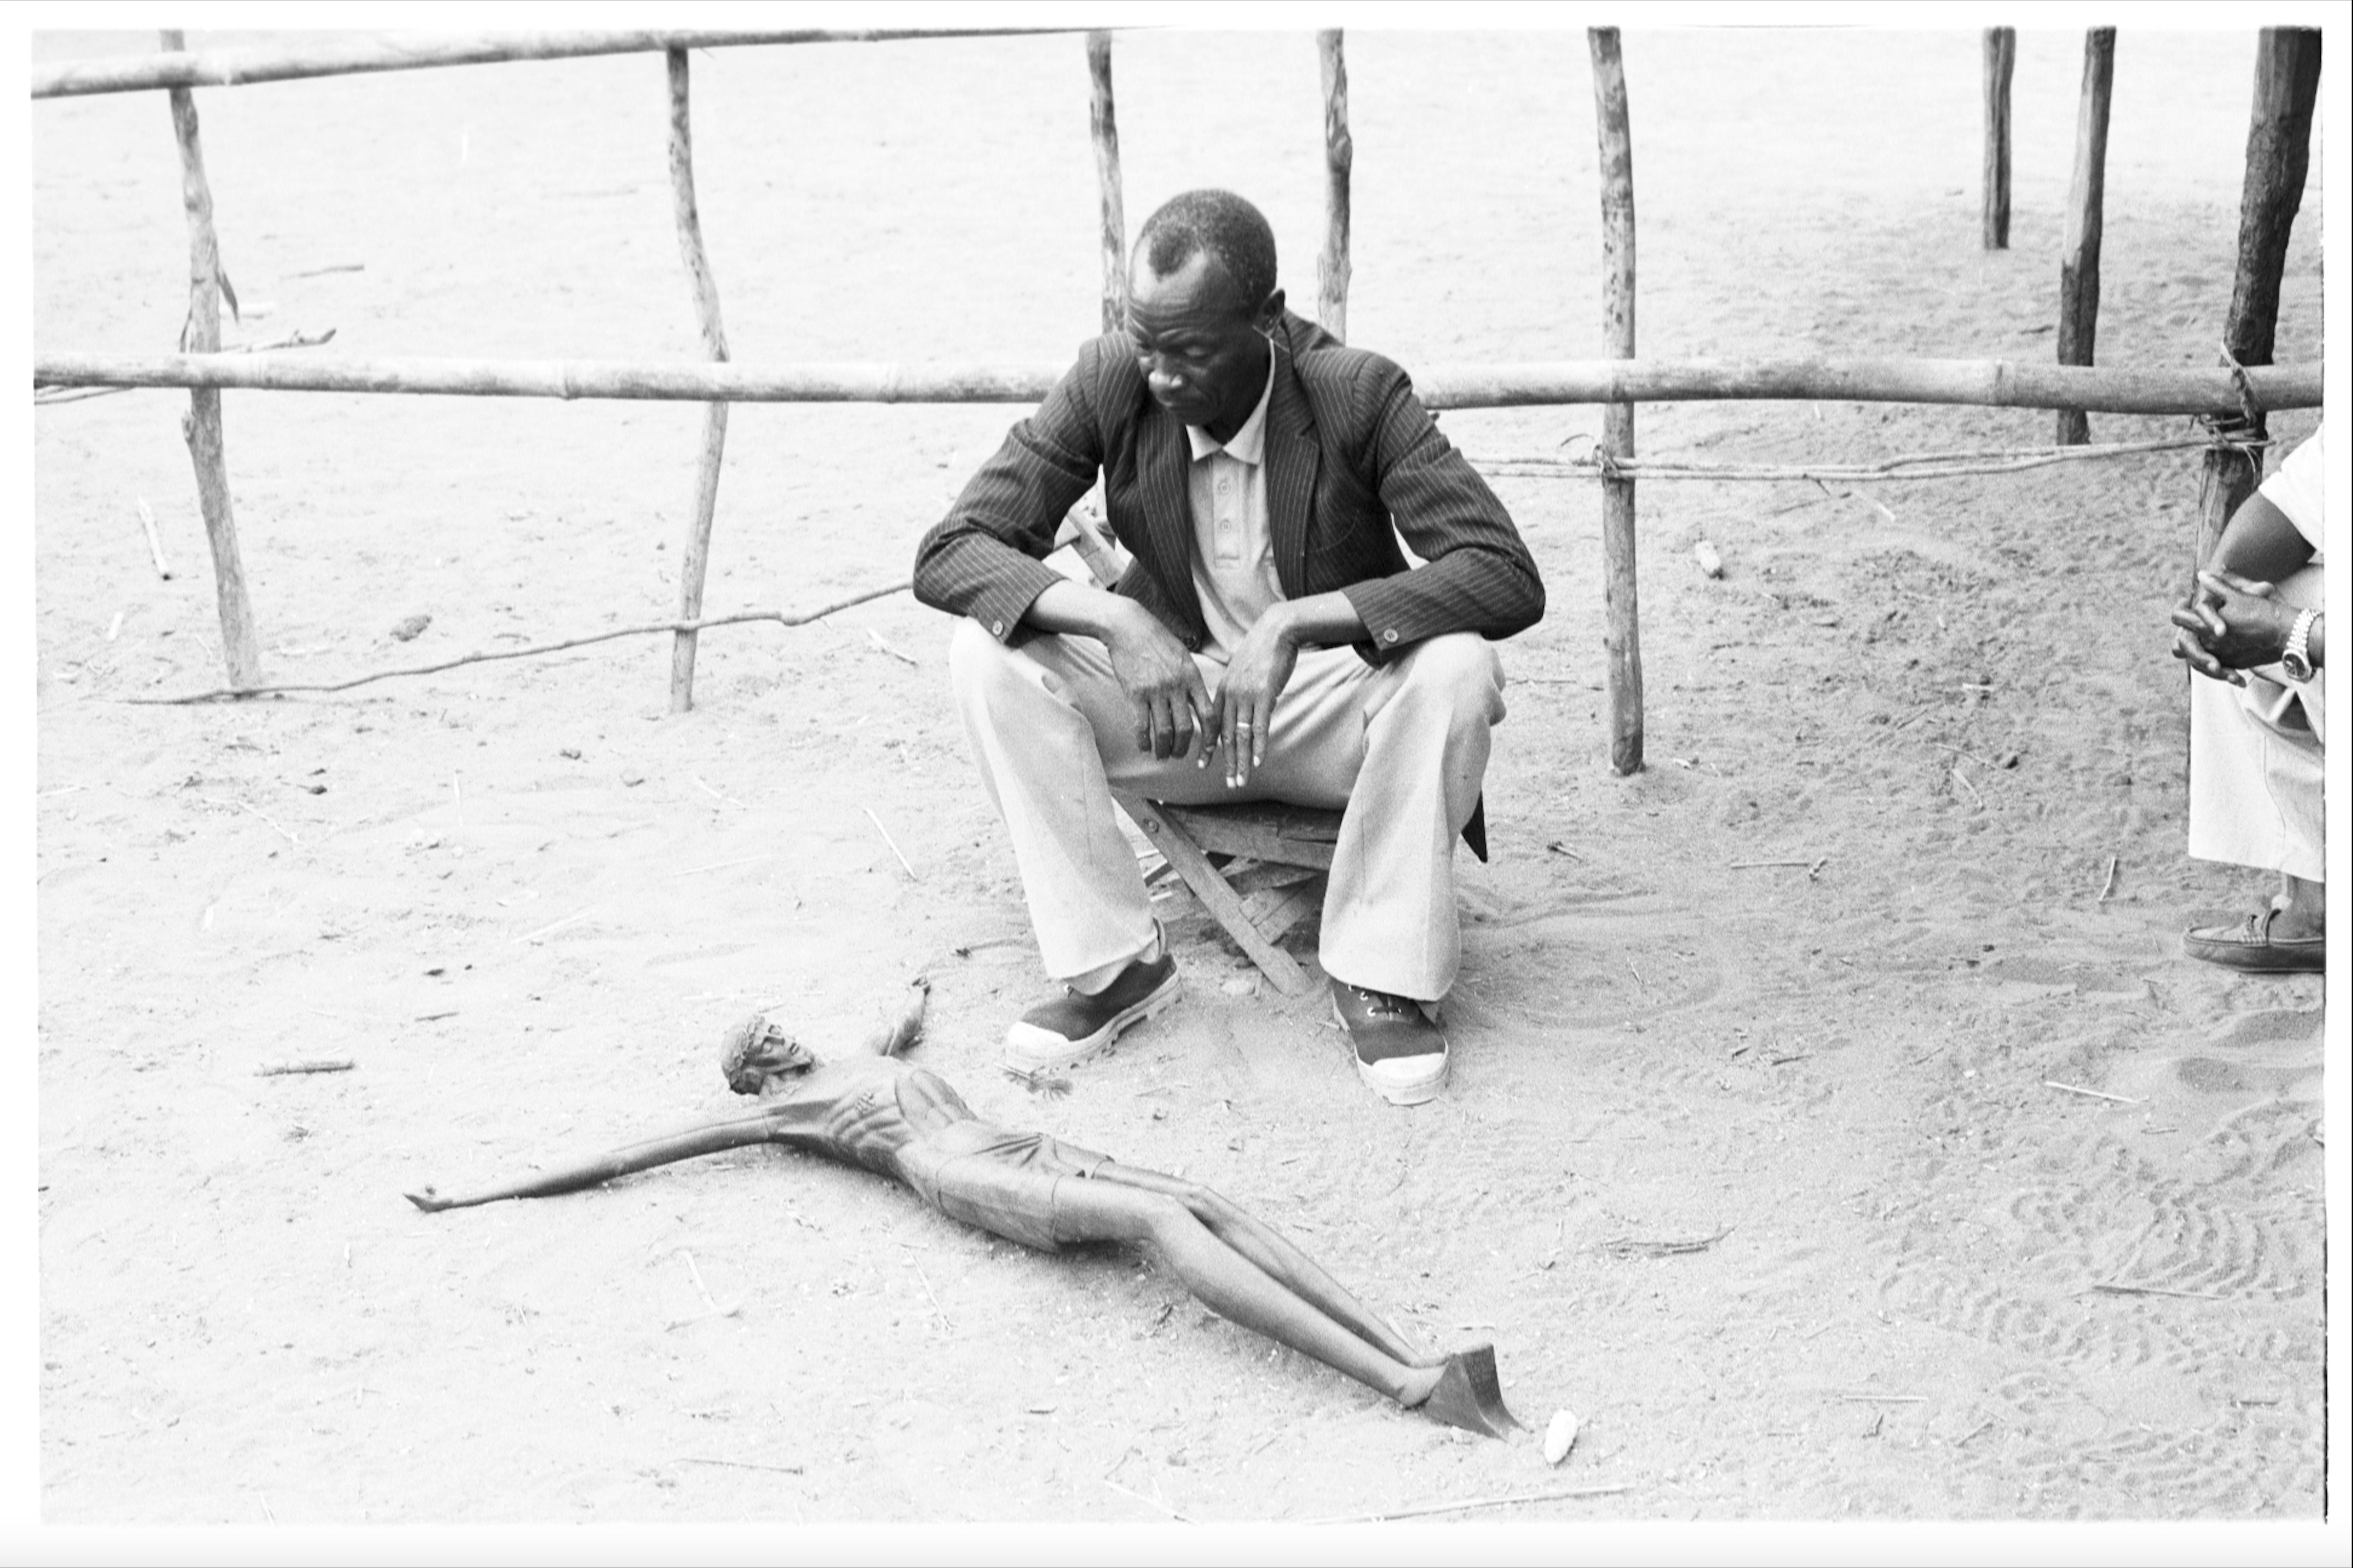 Nandimba (Mueda), 1997. Photo Gianfranco Gondolfo in' Arte Makonde, Caminhos recentes', Maputo, April-May.